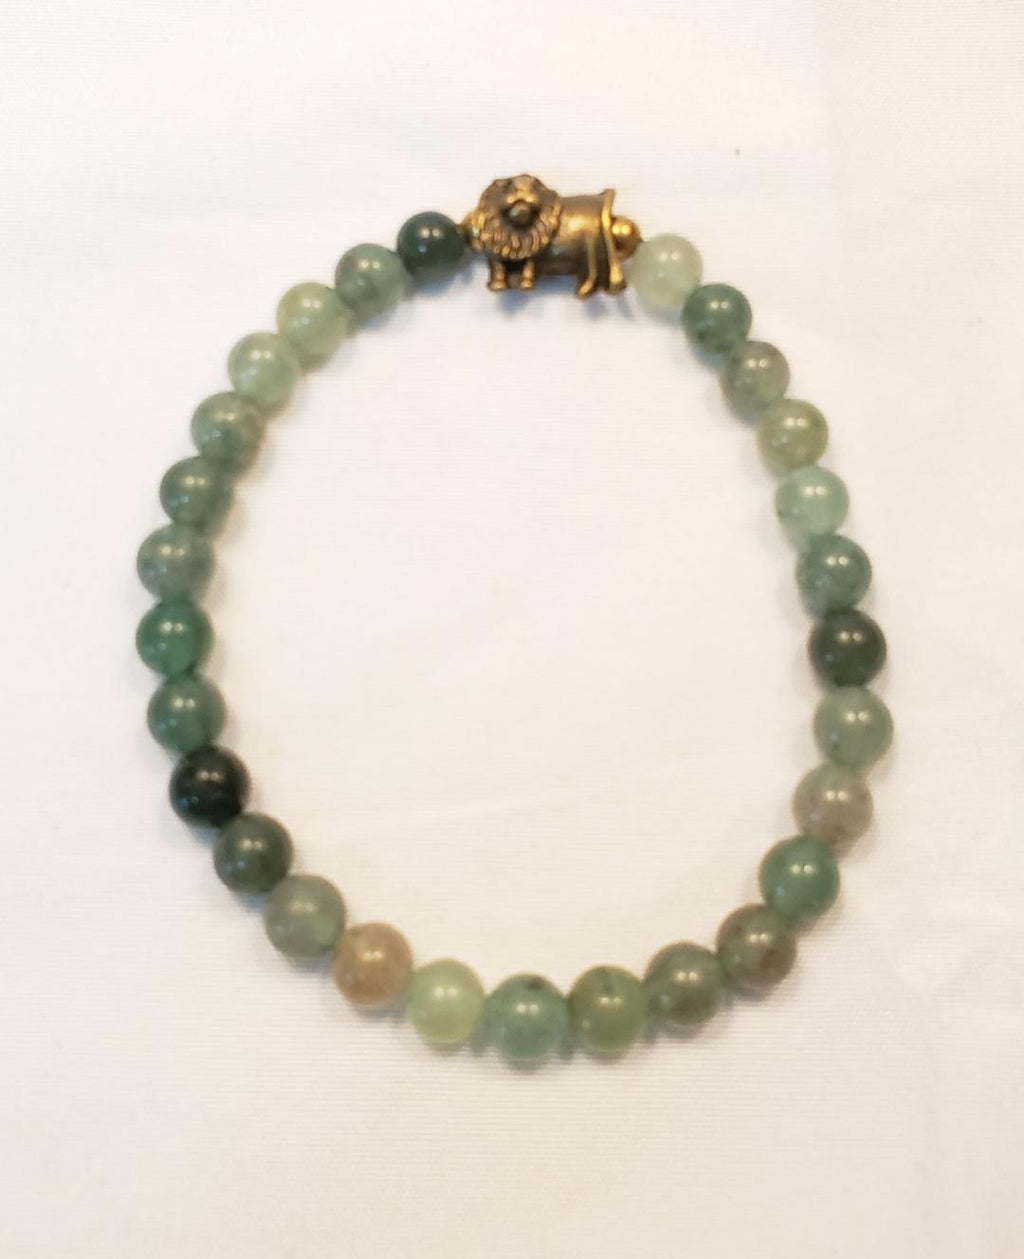 Jade, green agate bracelet